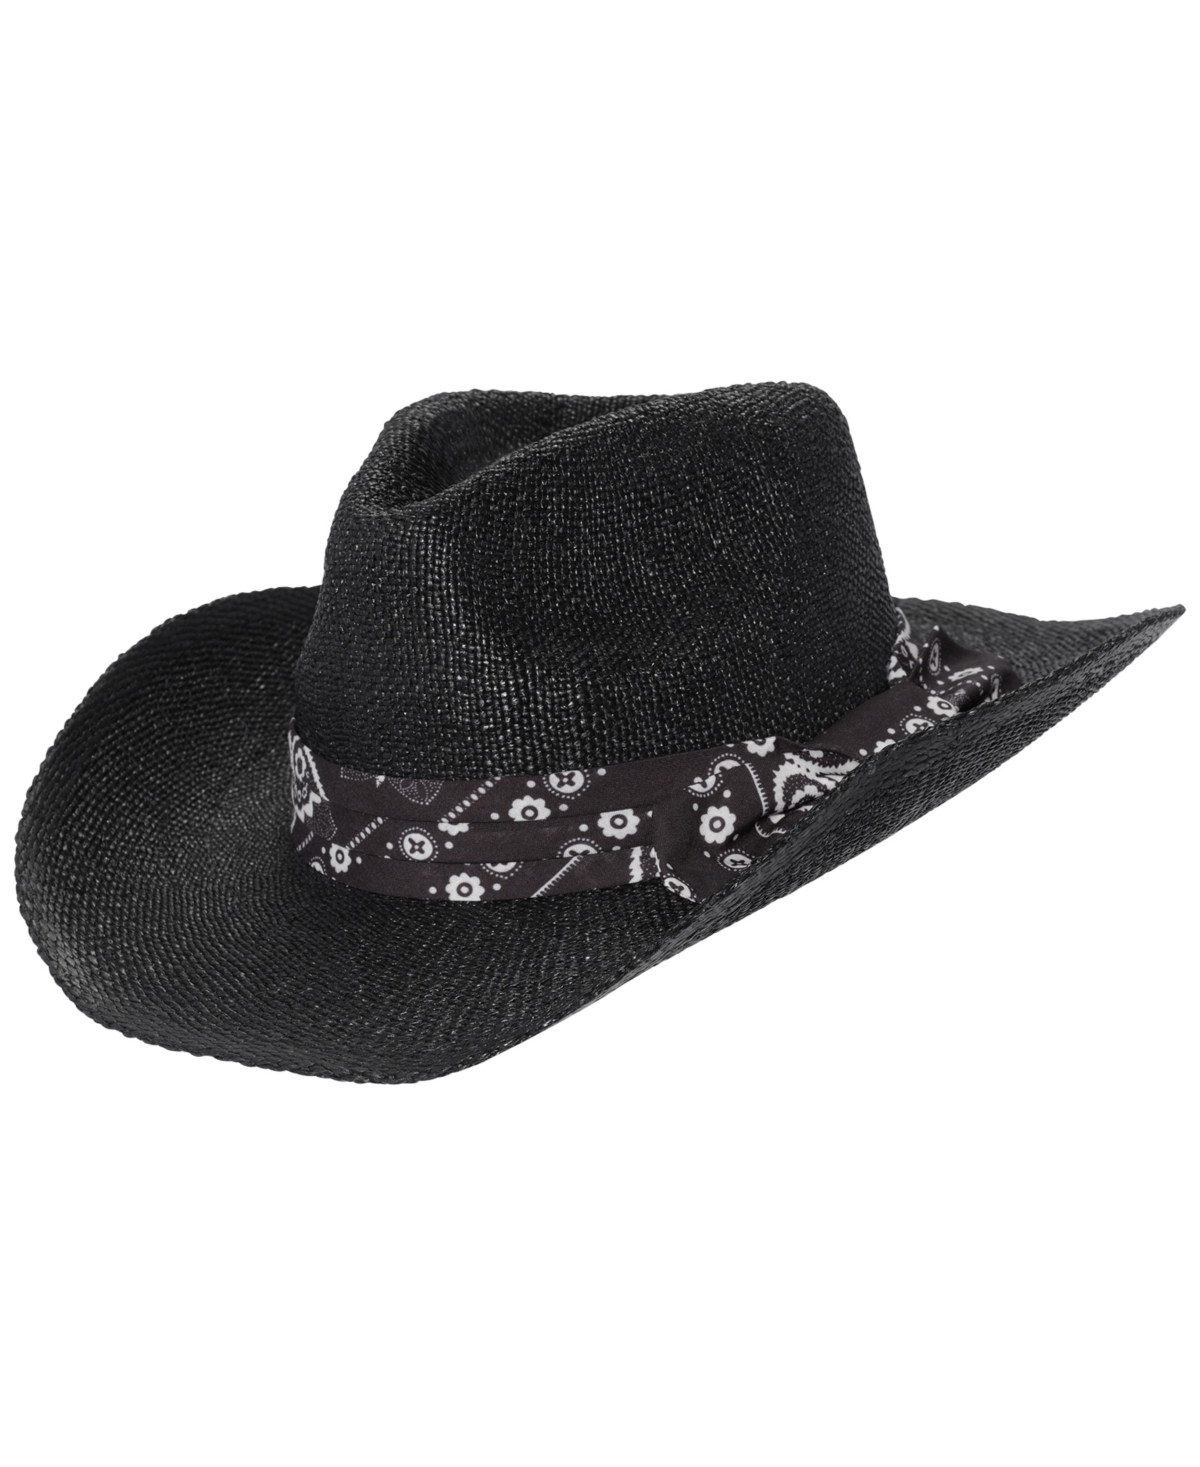 Cowboy Hat With Fabric Tie - Black